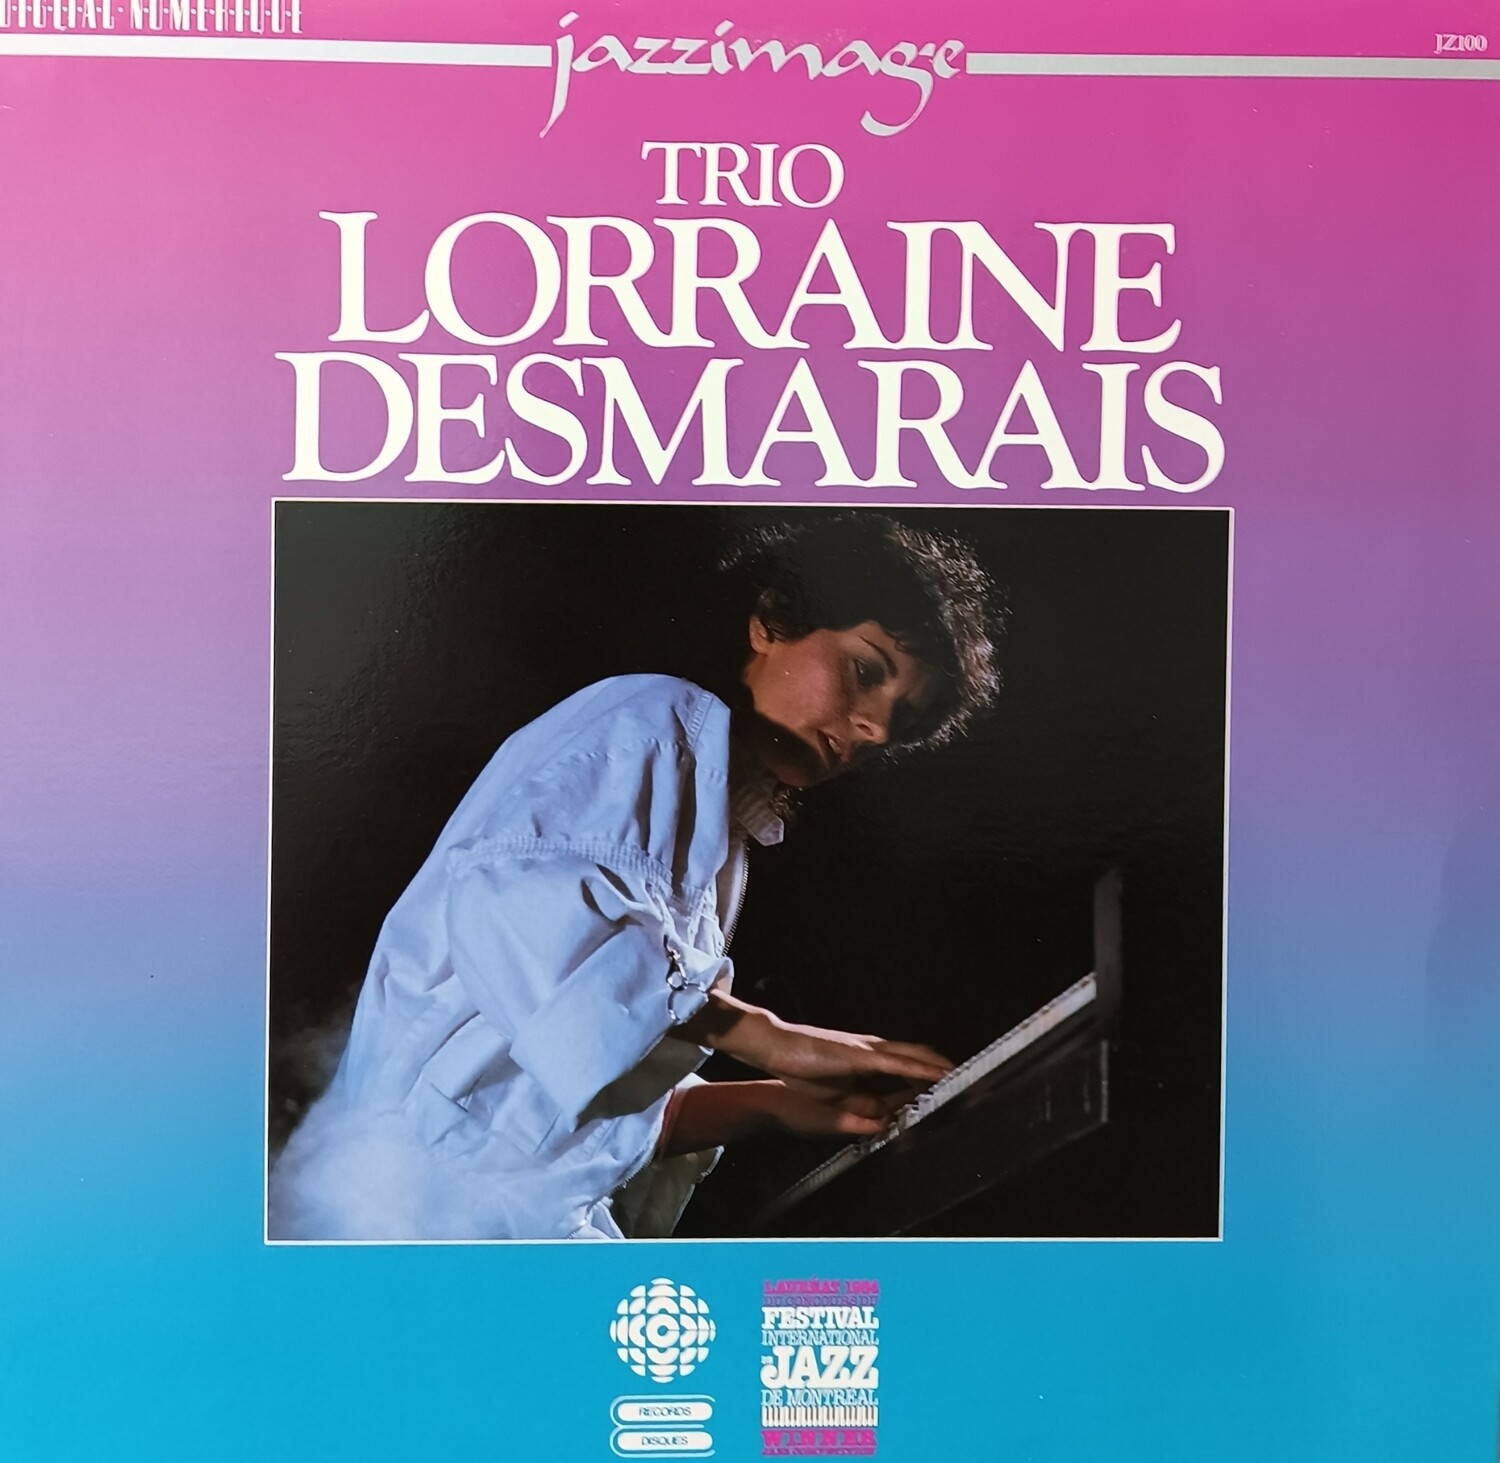 LORRAINE DESMARAIS - Trio Lorraine Desmarais